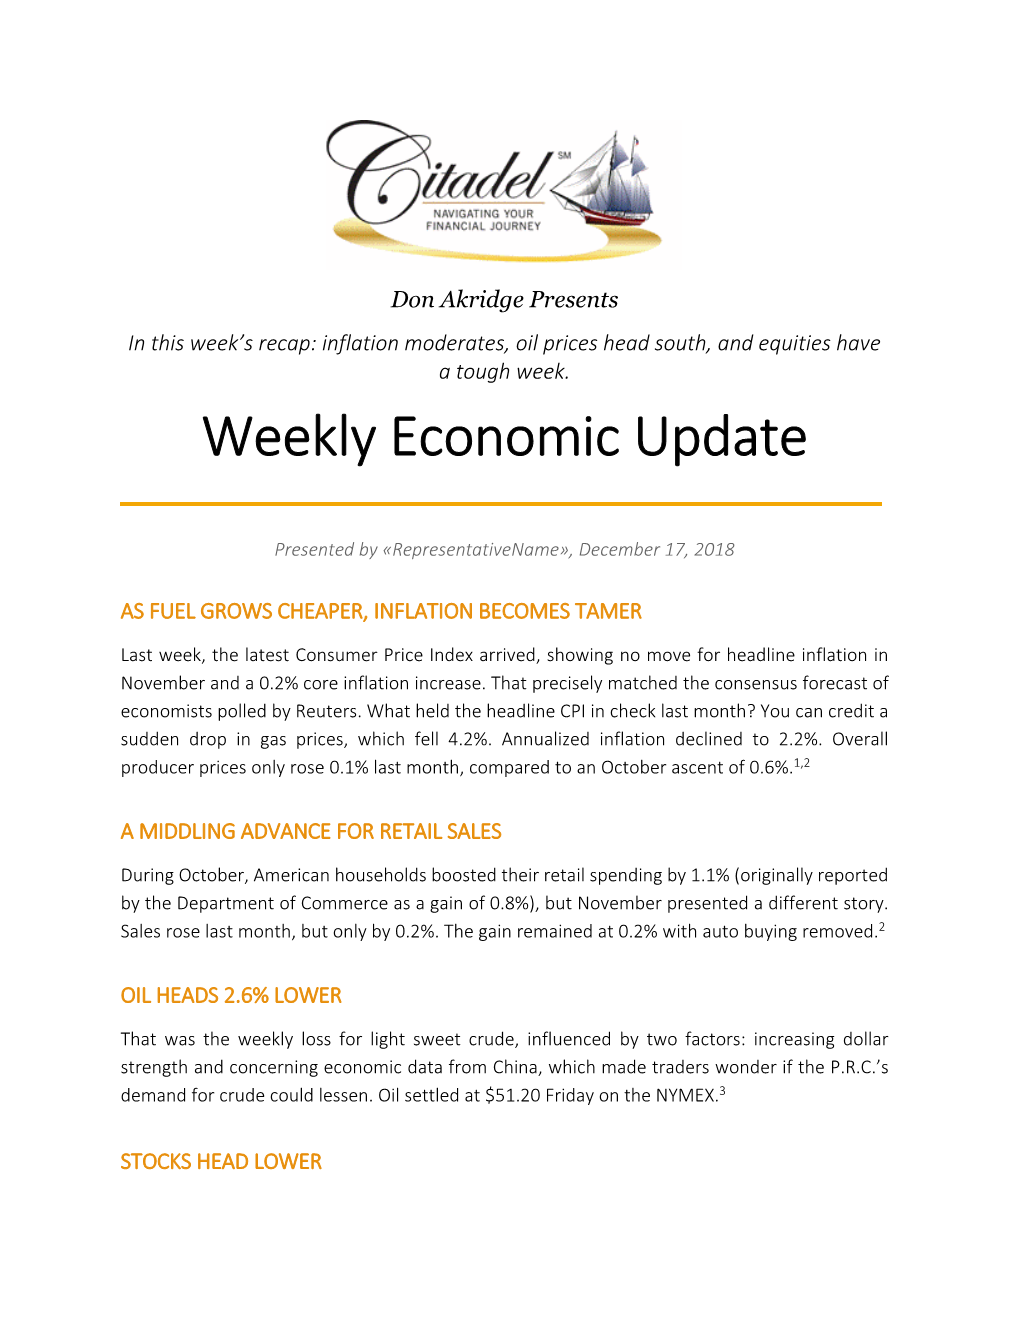 Weekly Economic Update